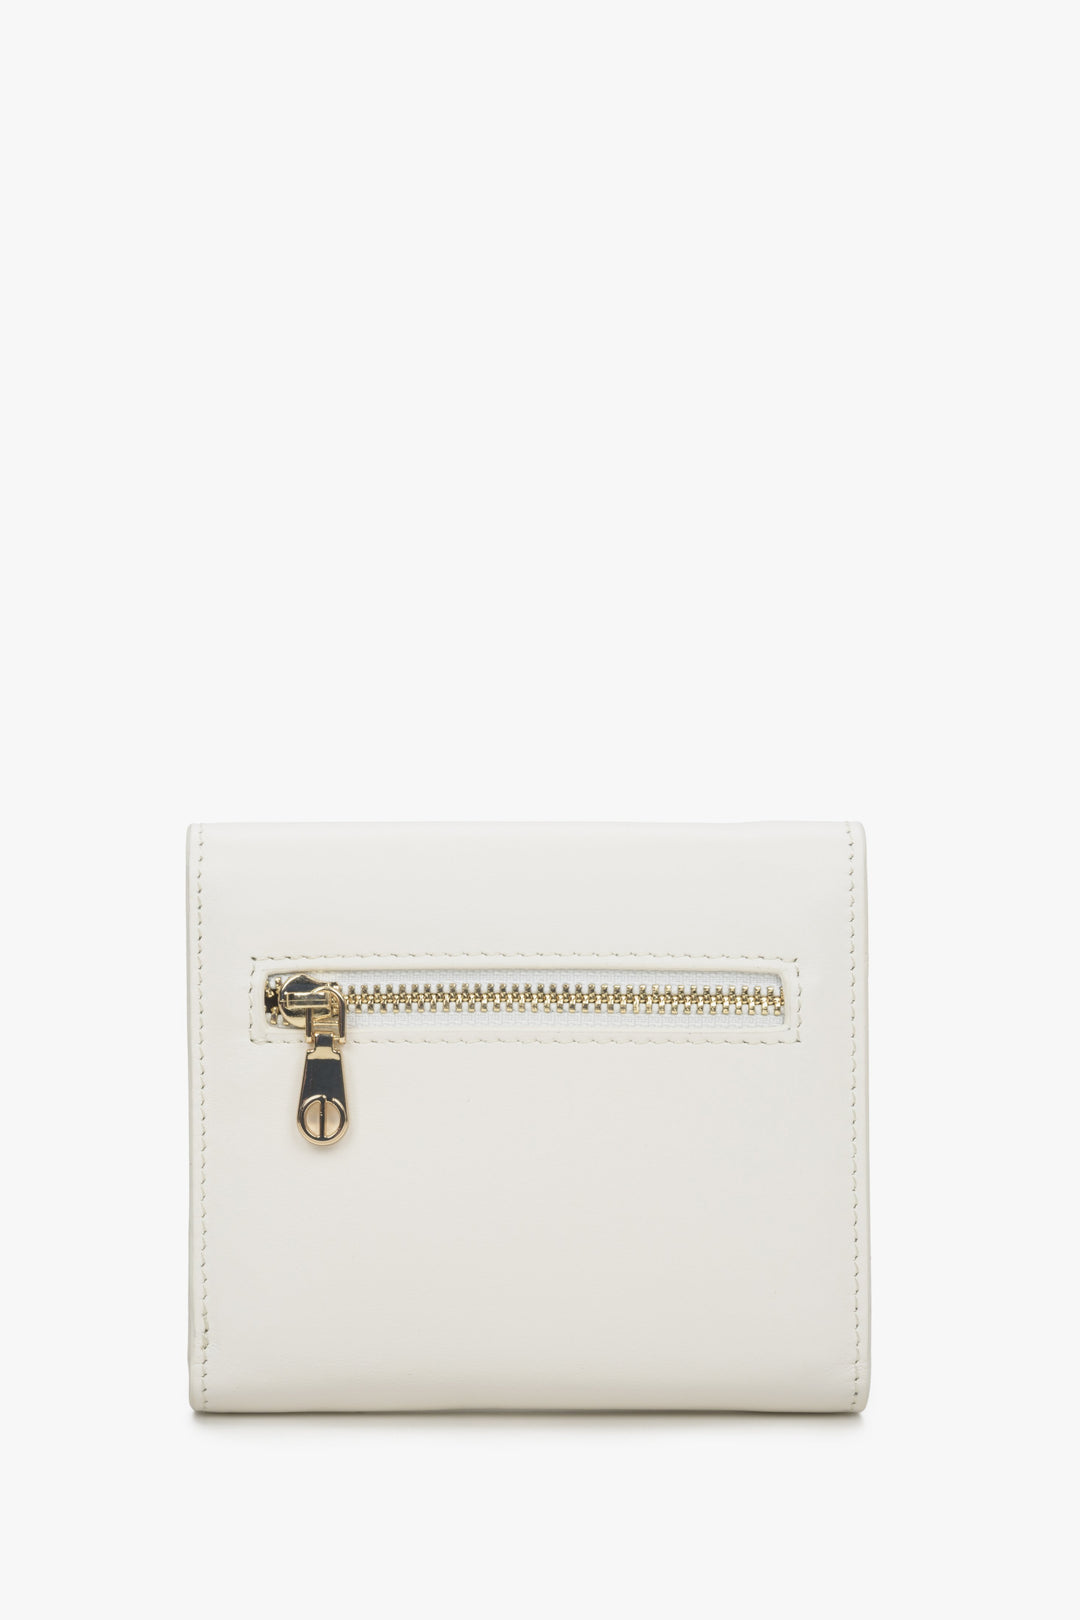 Women's light beige wallet made of genuine leather - back side.